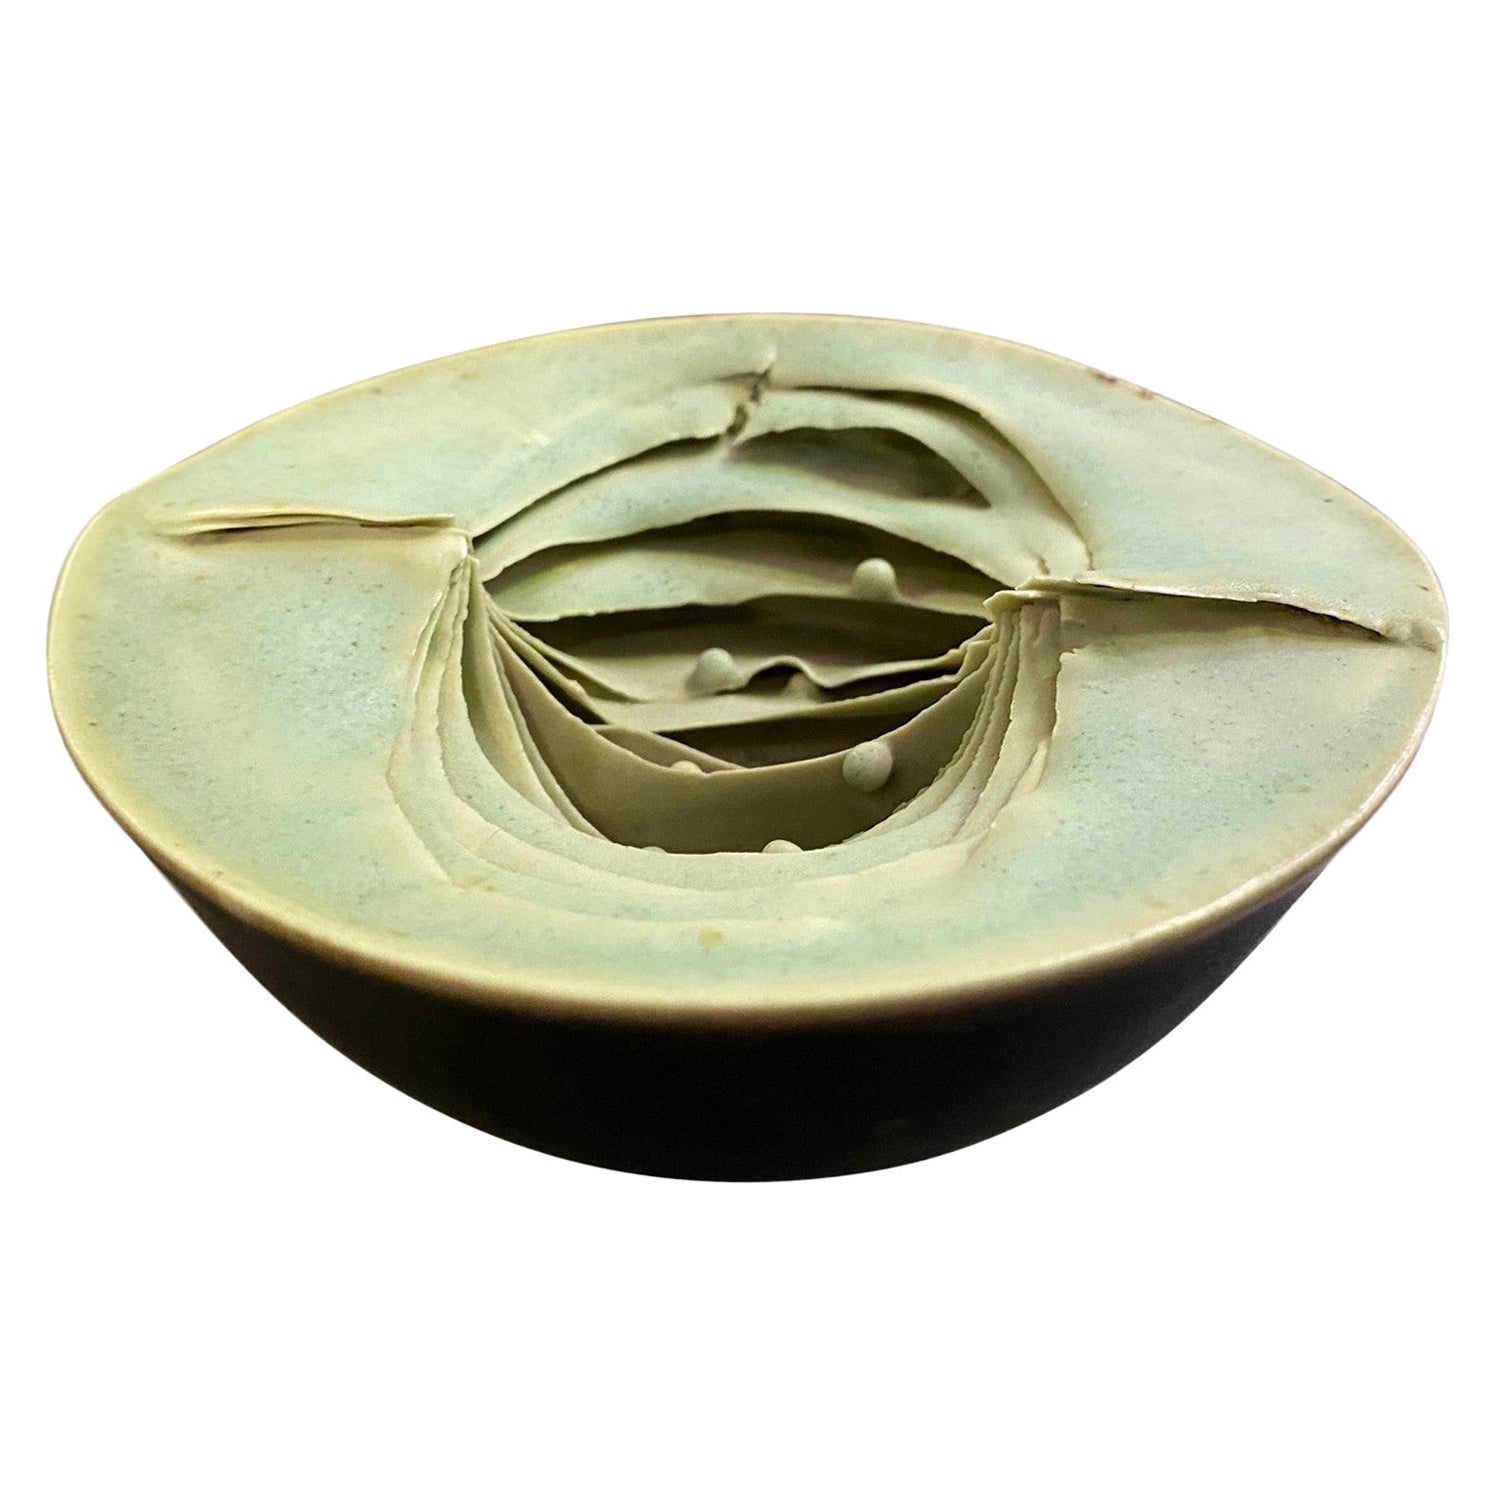 Peter Simpson Signed British Uk Studio Pottery Bowl Organic Nature Form Vessel For Sale